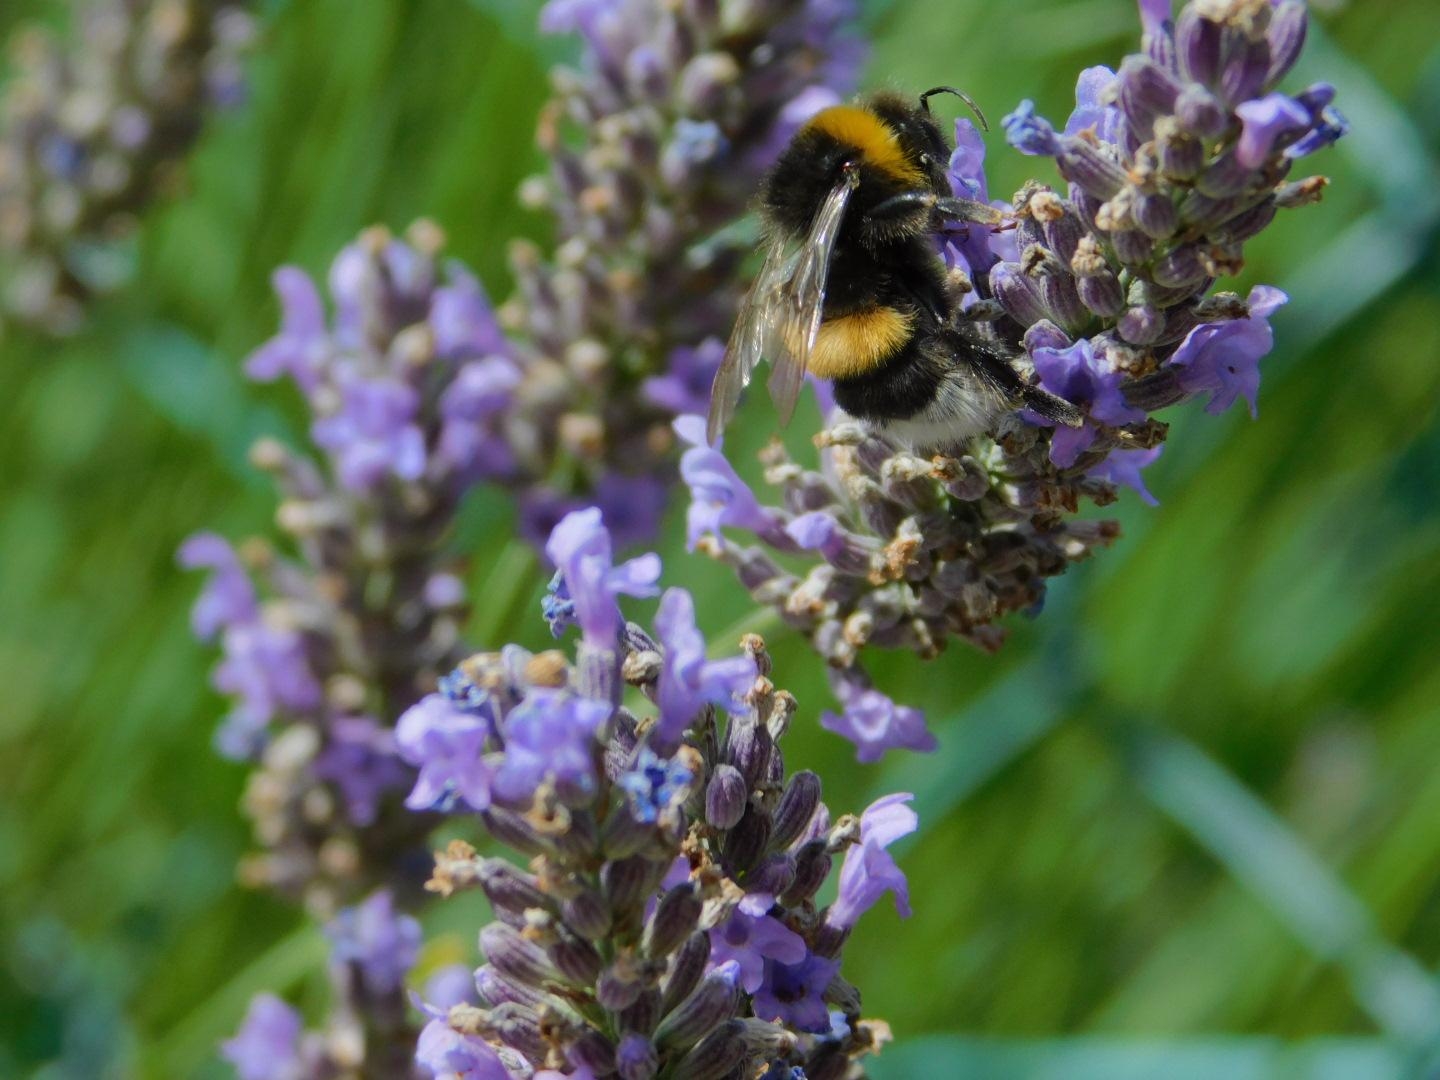 💛 Bumblebeeautiful 💛
#Lavendel #Hummel #bumblebee #Sommer
